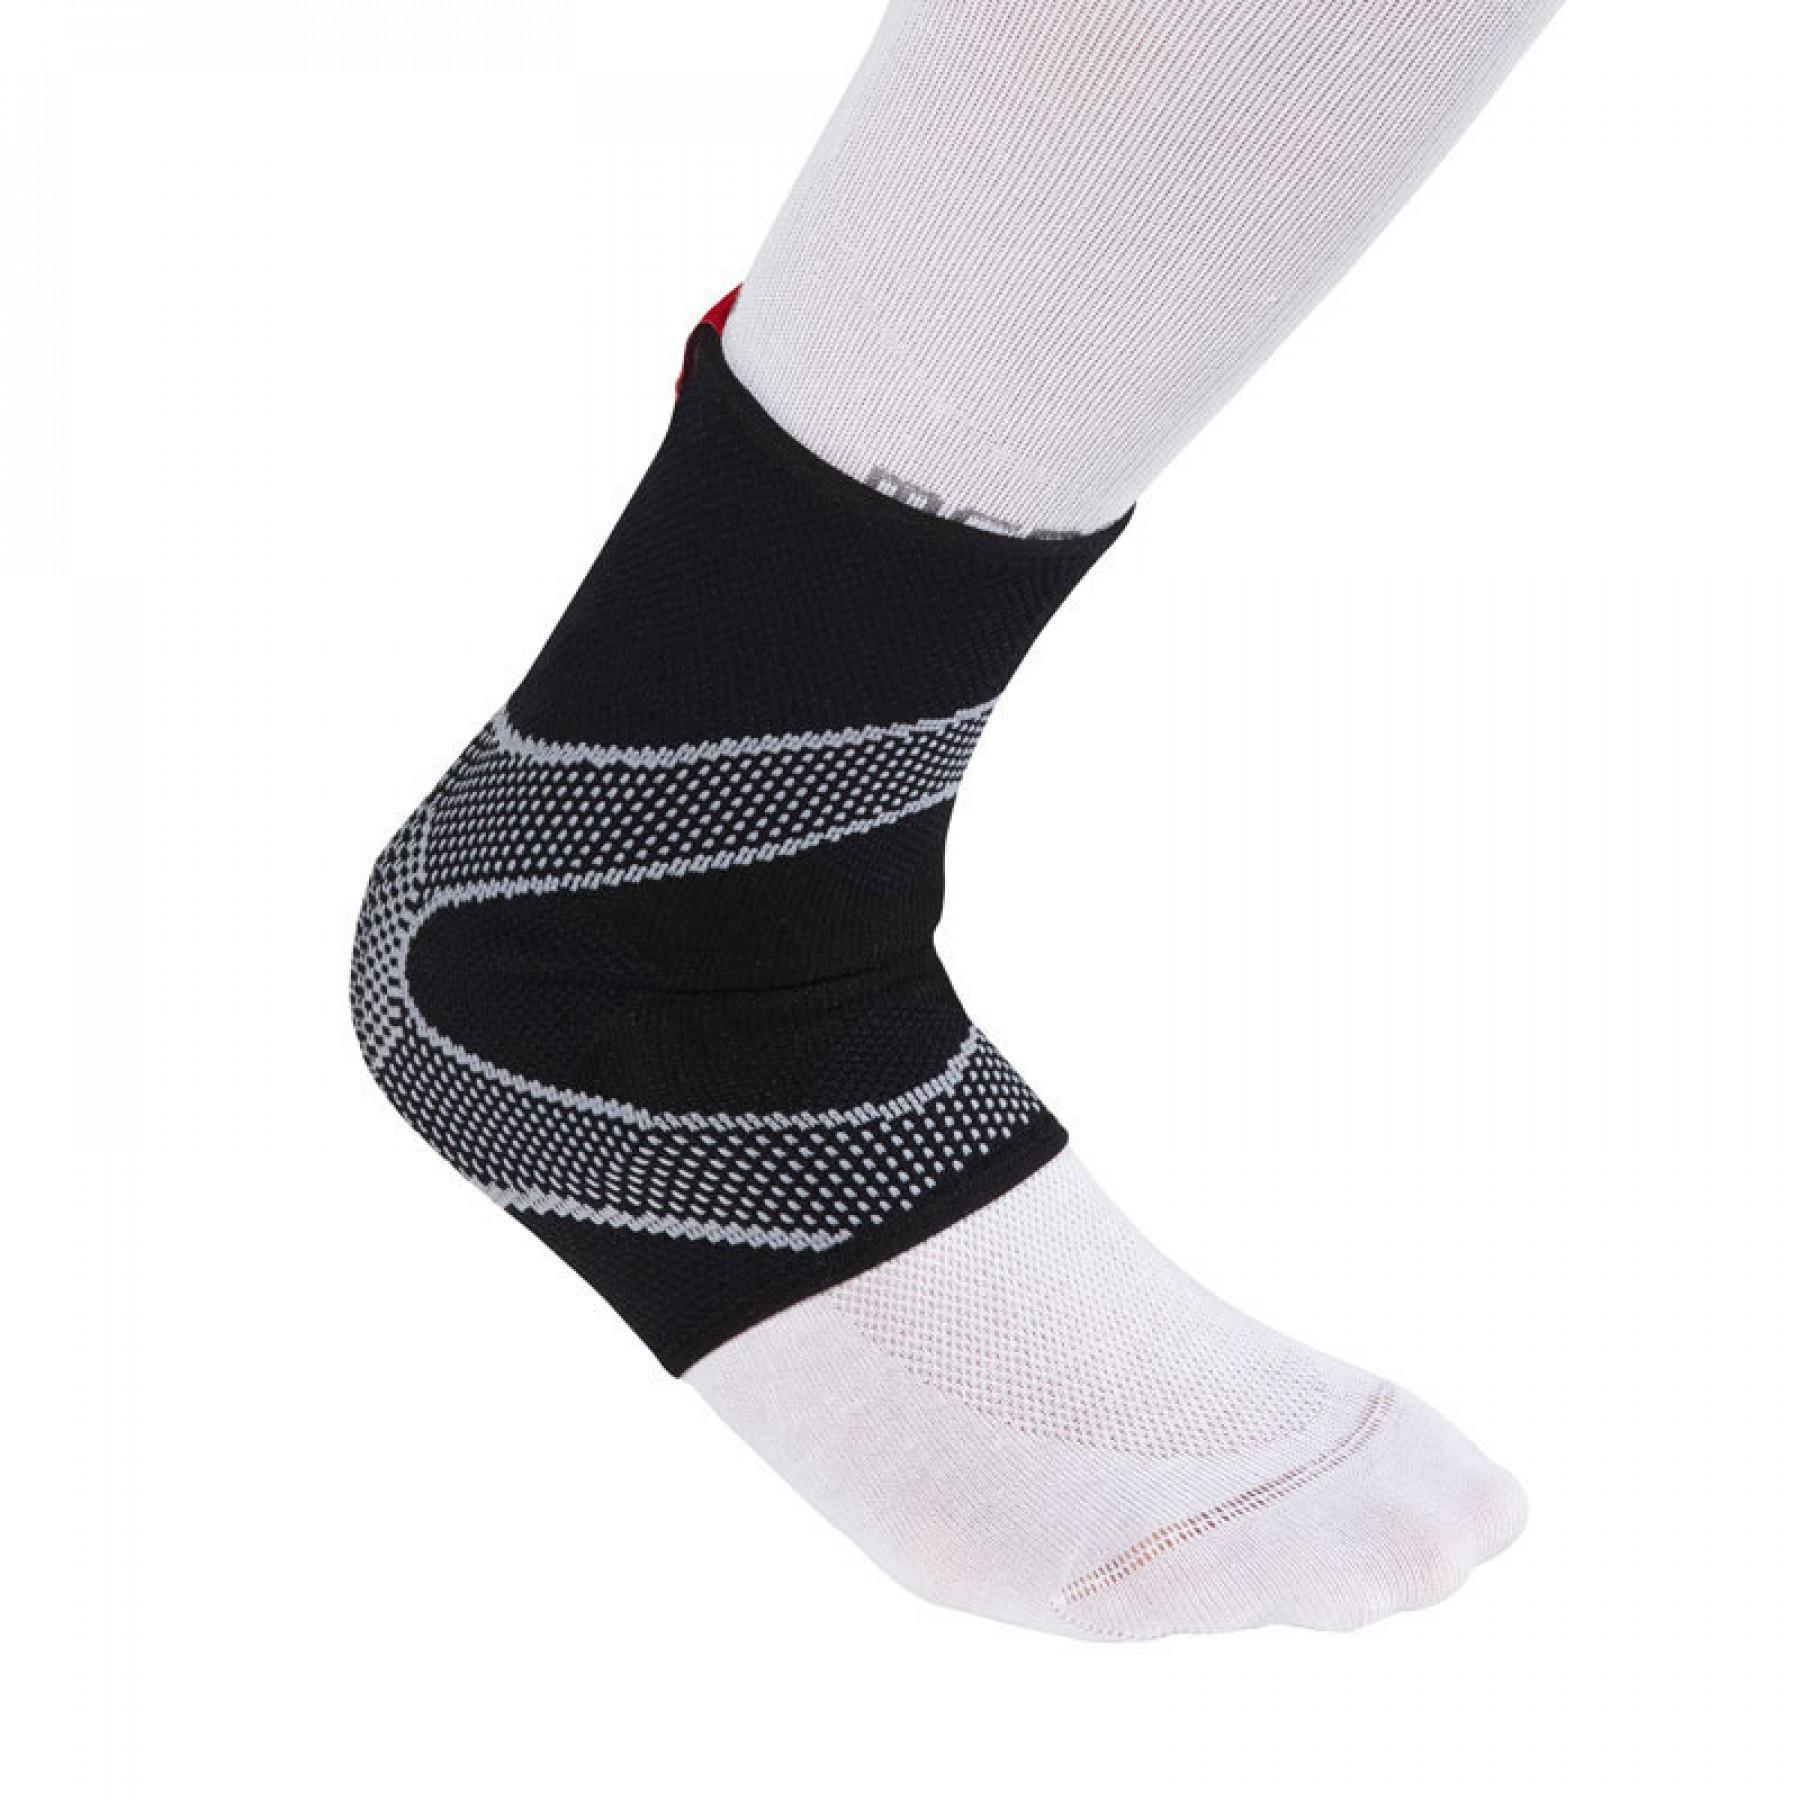 Ankle brace with gel backing McDavid 4-Way Elastic